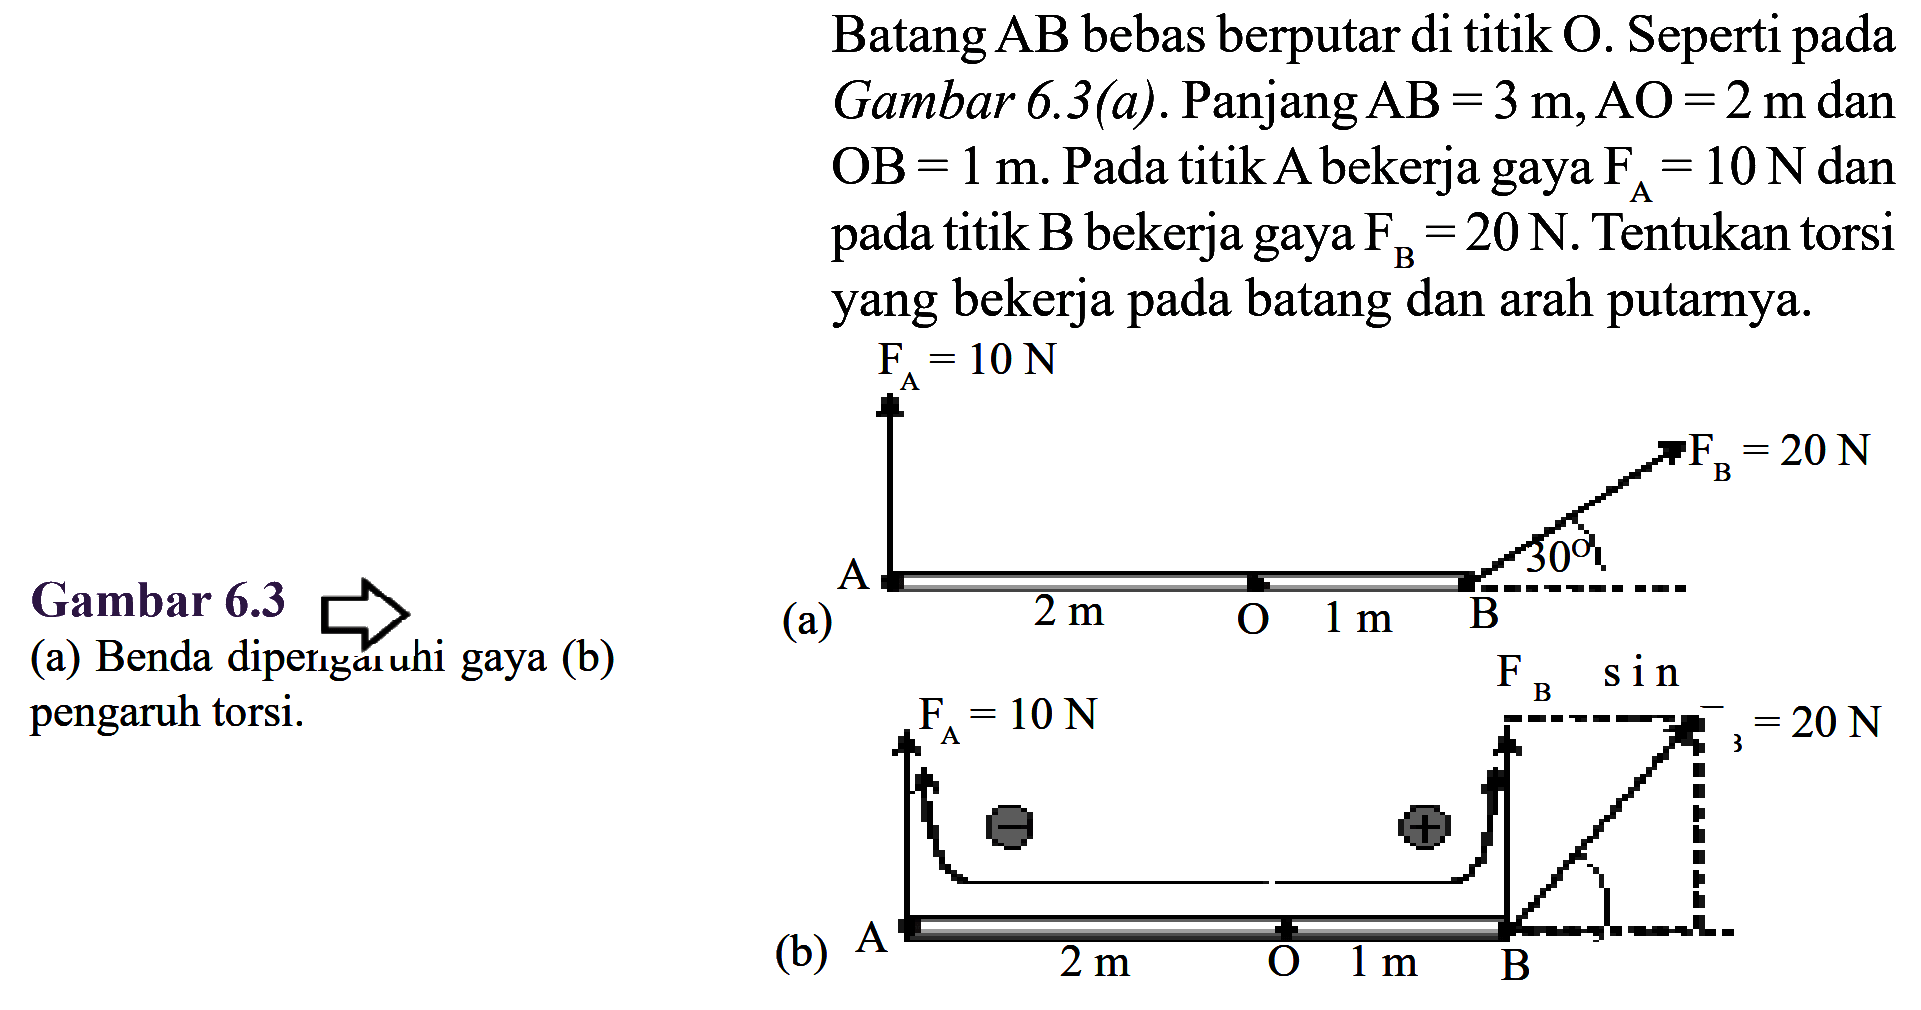 Batang AB bebas berputar di titik O. Seperti pada Gambar 6.3 (a). Panjang AB=3 m, AO=2 m dan OB=1 m. Pada titik A bekerja gaya FA=10 N dan pada titik B bekerja gaya FB=20 N. Tentukan torsi yang bekerja pada batang dan arah putarnya. Gambar  6.3 (a) Benda dipengaruhi gaya (b) pengaruh torsi. FA=10 N FB=20 N 30 A 2 m O 1 m B (a) FA=10 N FB sin FB=20 N A 2 m O 1 m B (b) 